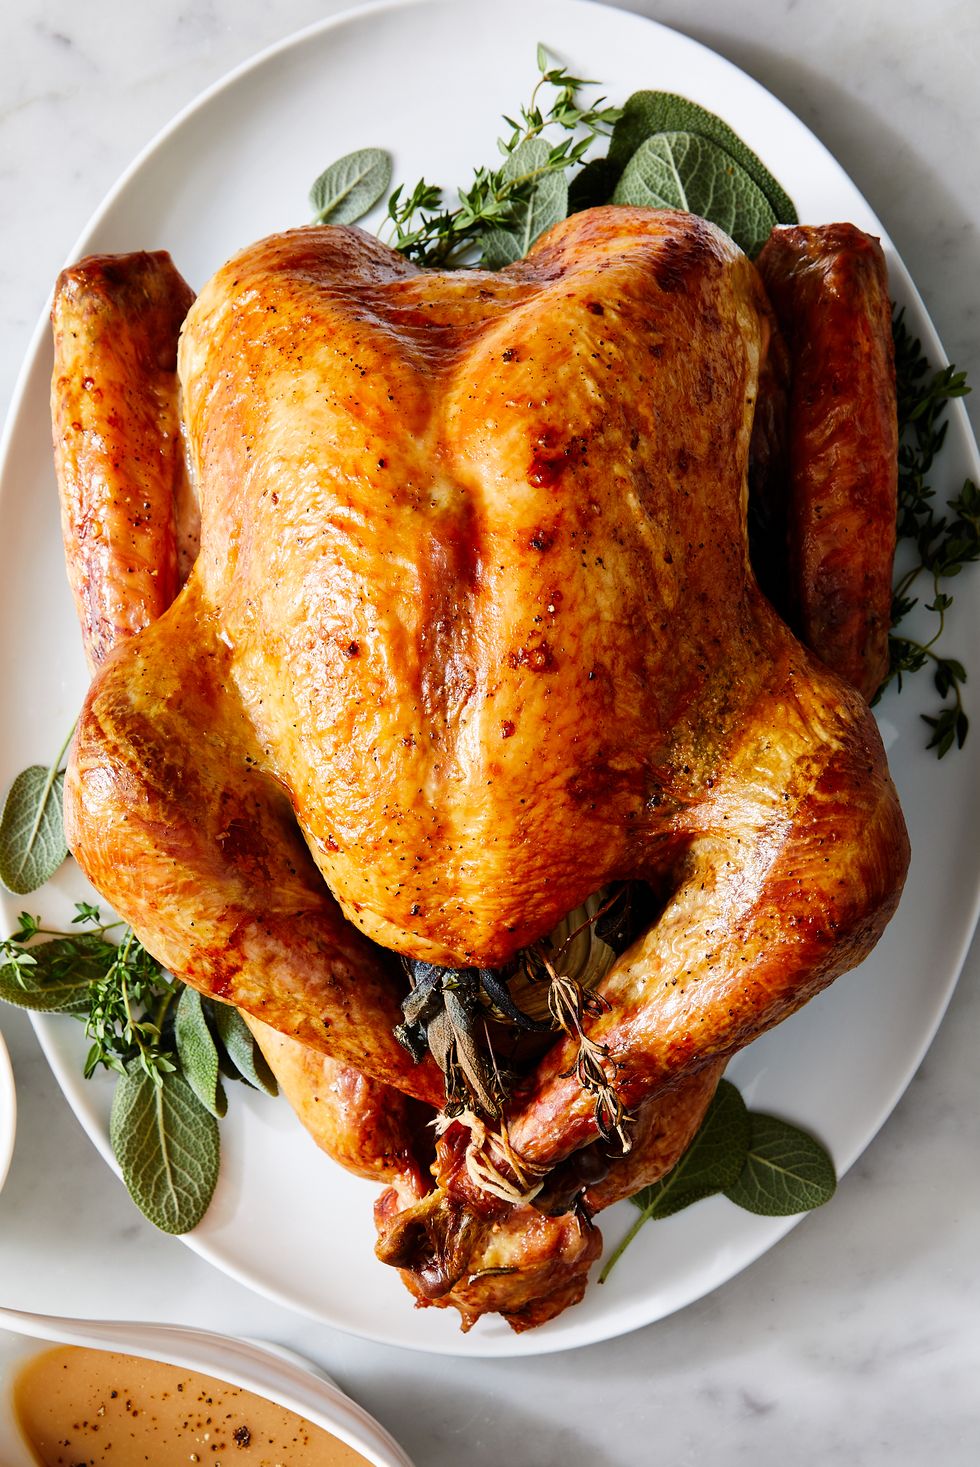 https://hips.hearstapps.com/hmg-prod/images/best-oven-roast-turkey3-1668547734.jpg?crop=0.835xw:1.00xh;0.0595xw,0&resize=980:*